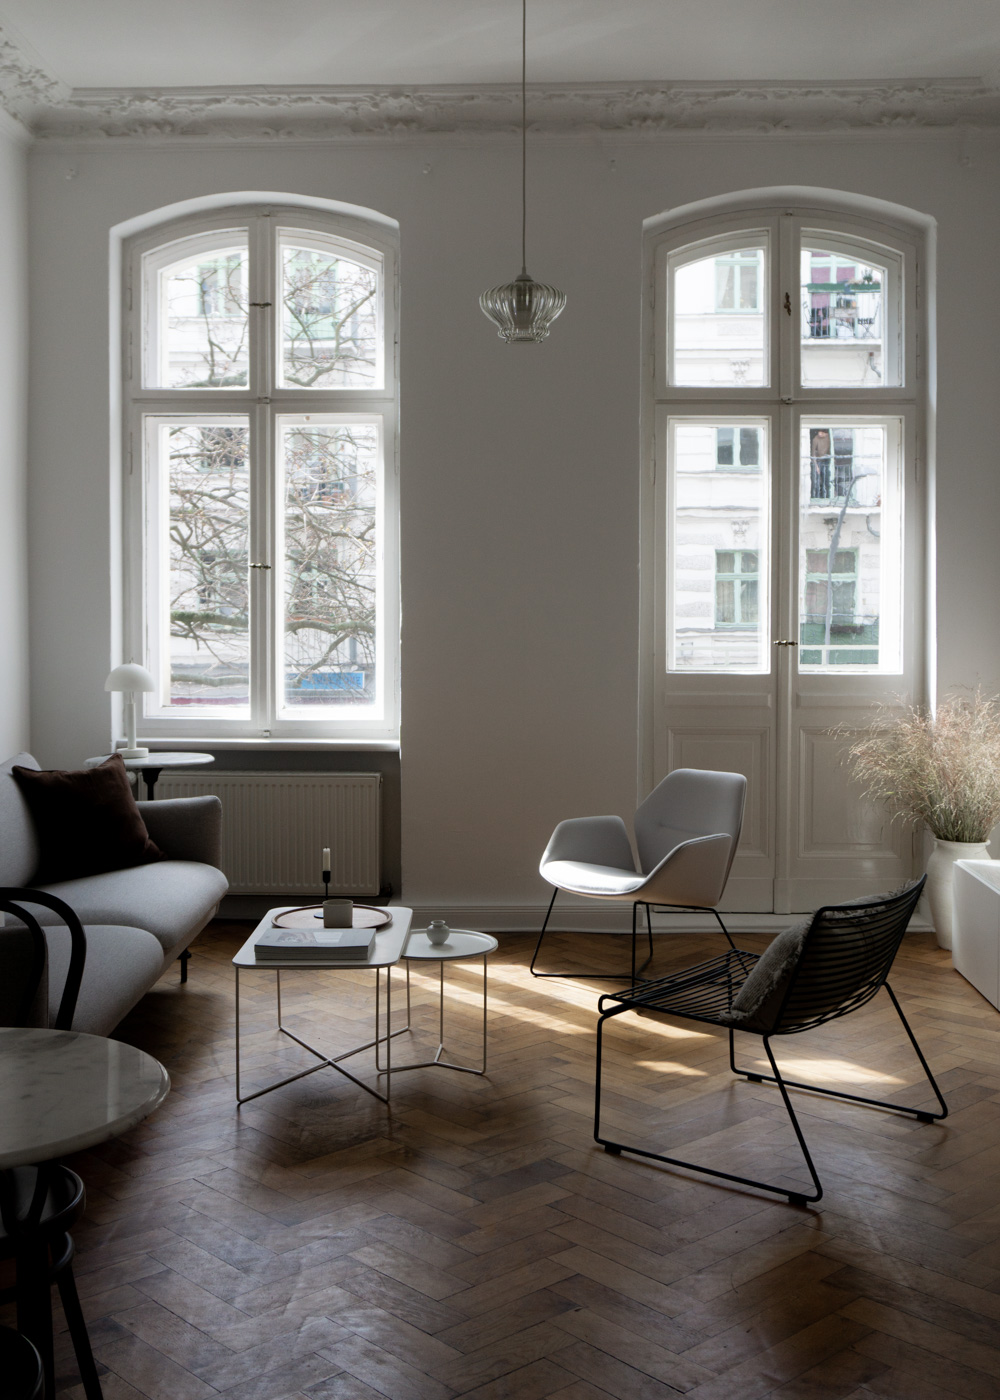 neutral interior, white and beige home, wood floors, minimalist simple decor, natural berlin apartment, scandinavian design, calm aesthetic